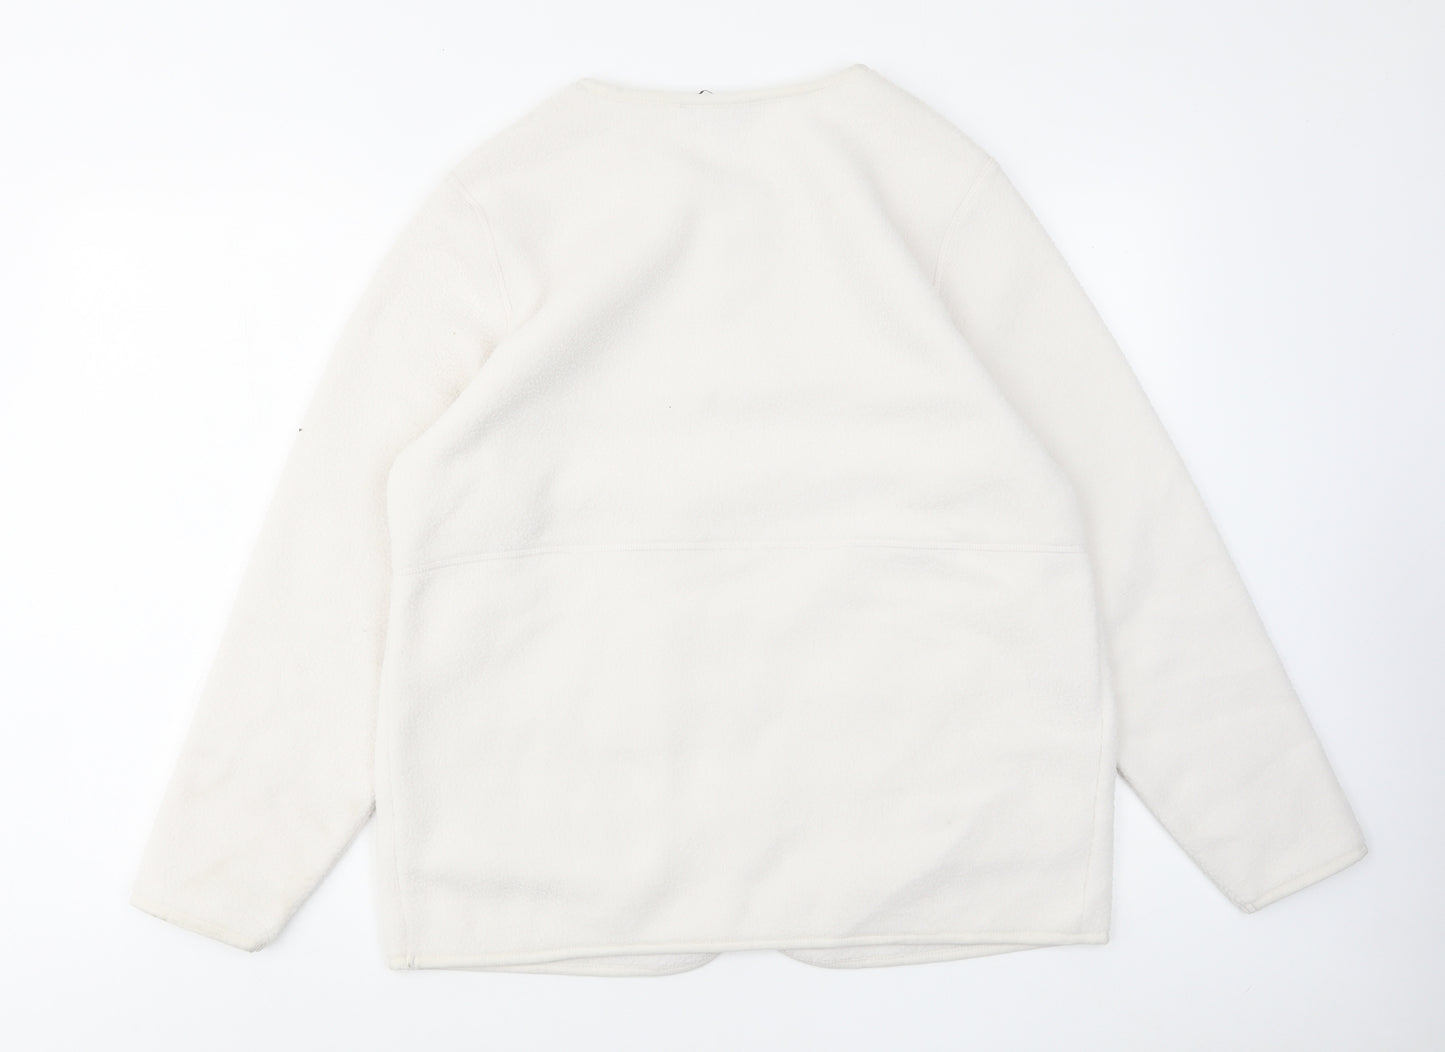 Marks and Spencer Womens White Jacket Blazer Size M Zip